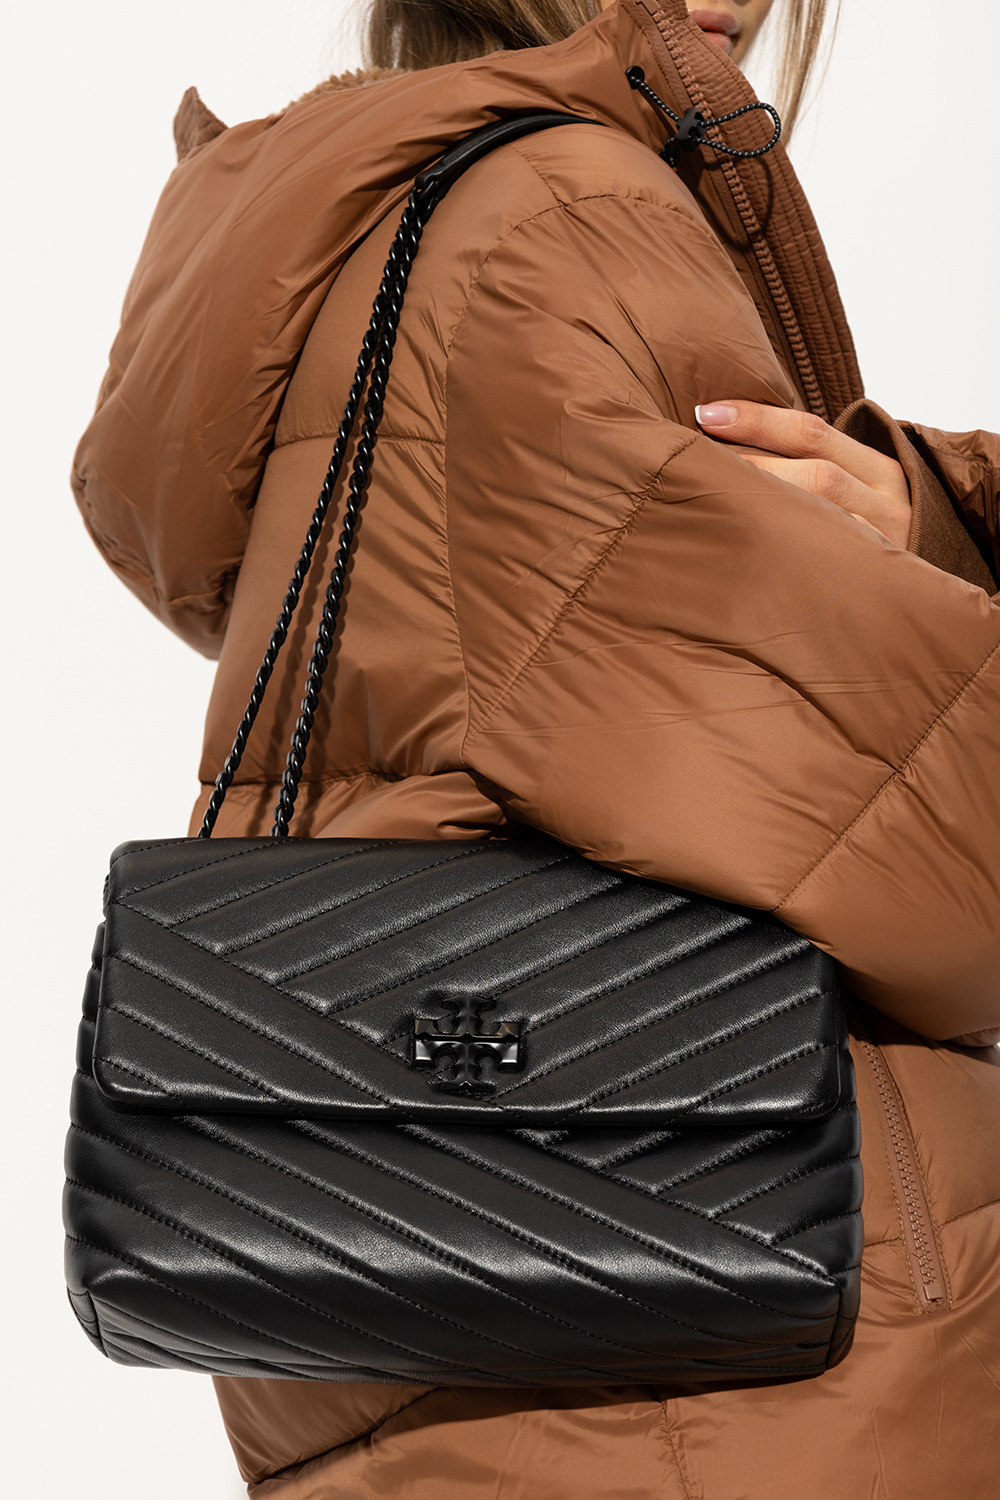 Tory Burch - Kira Chevron Leather Shoulder Bag